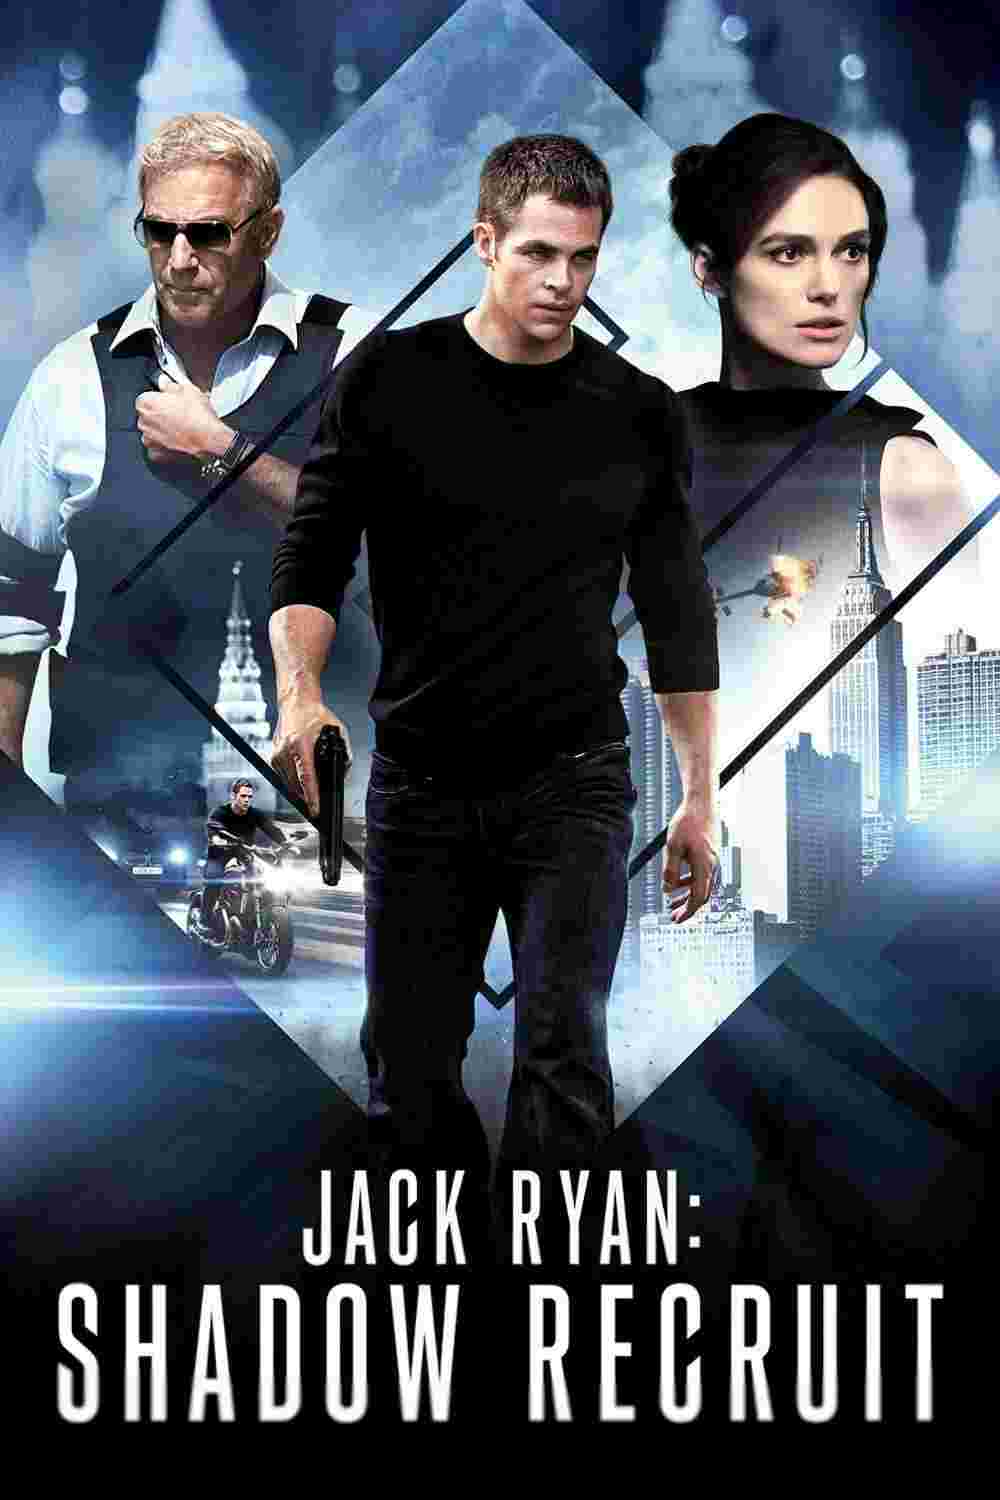 Jack Ryan: Shadow Recruit (2014) Chris Pine